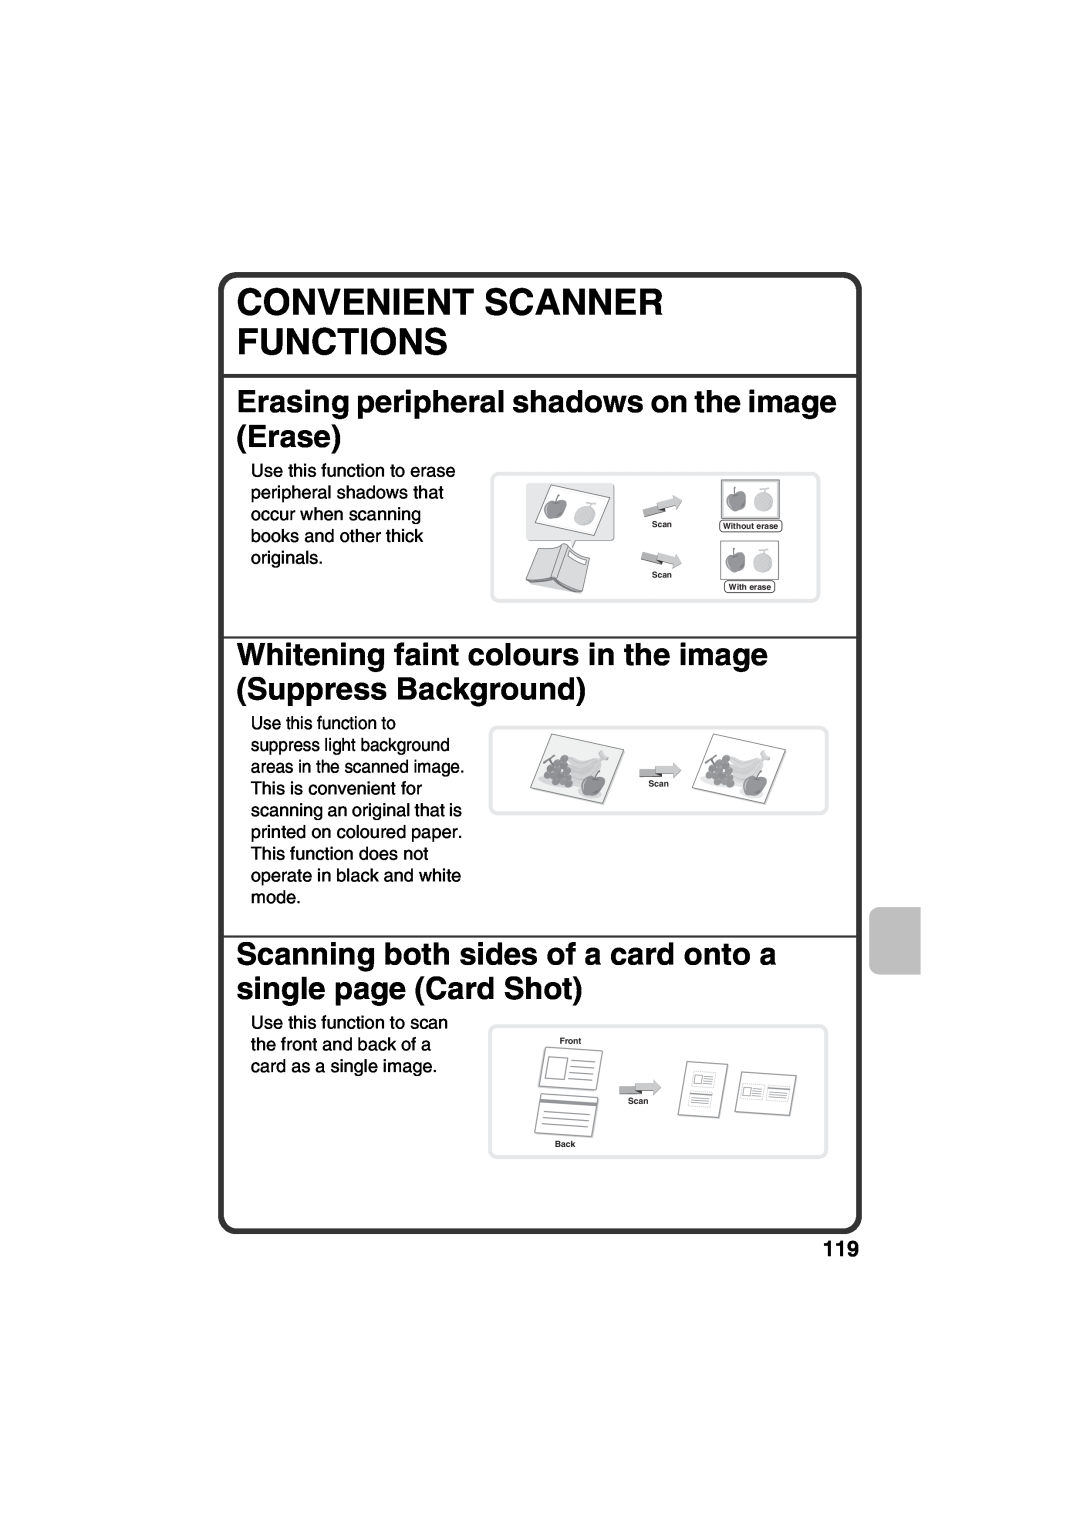 Sharp MX-C381, MX-C311 quick start Convenient Scanner Functions, Erasing peripheral shadows on the image Erase 